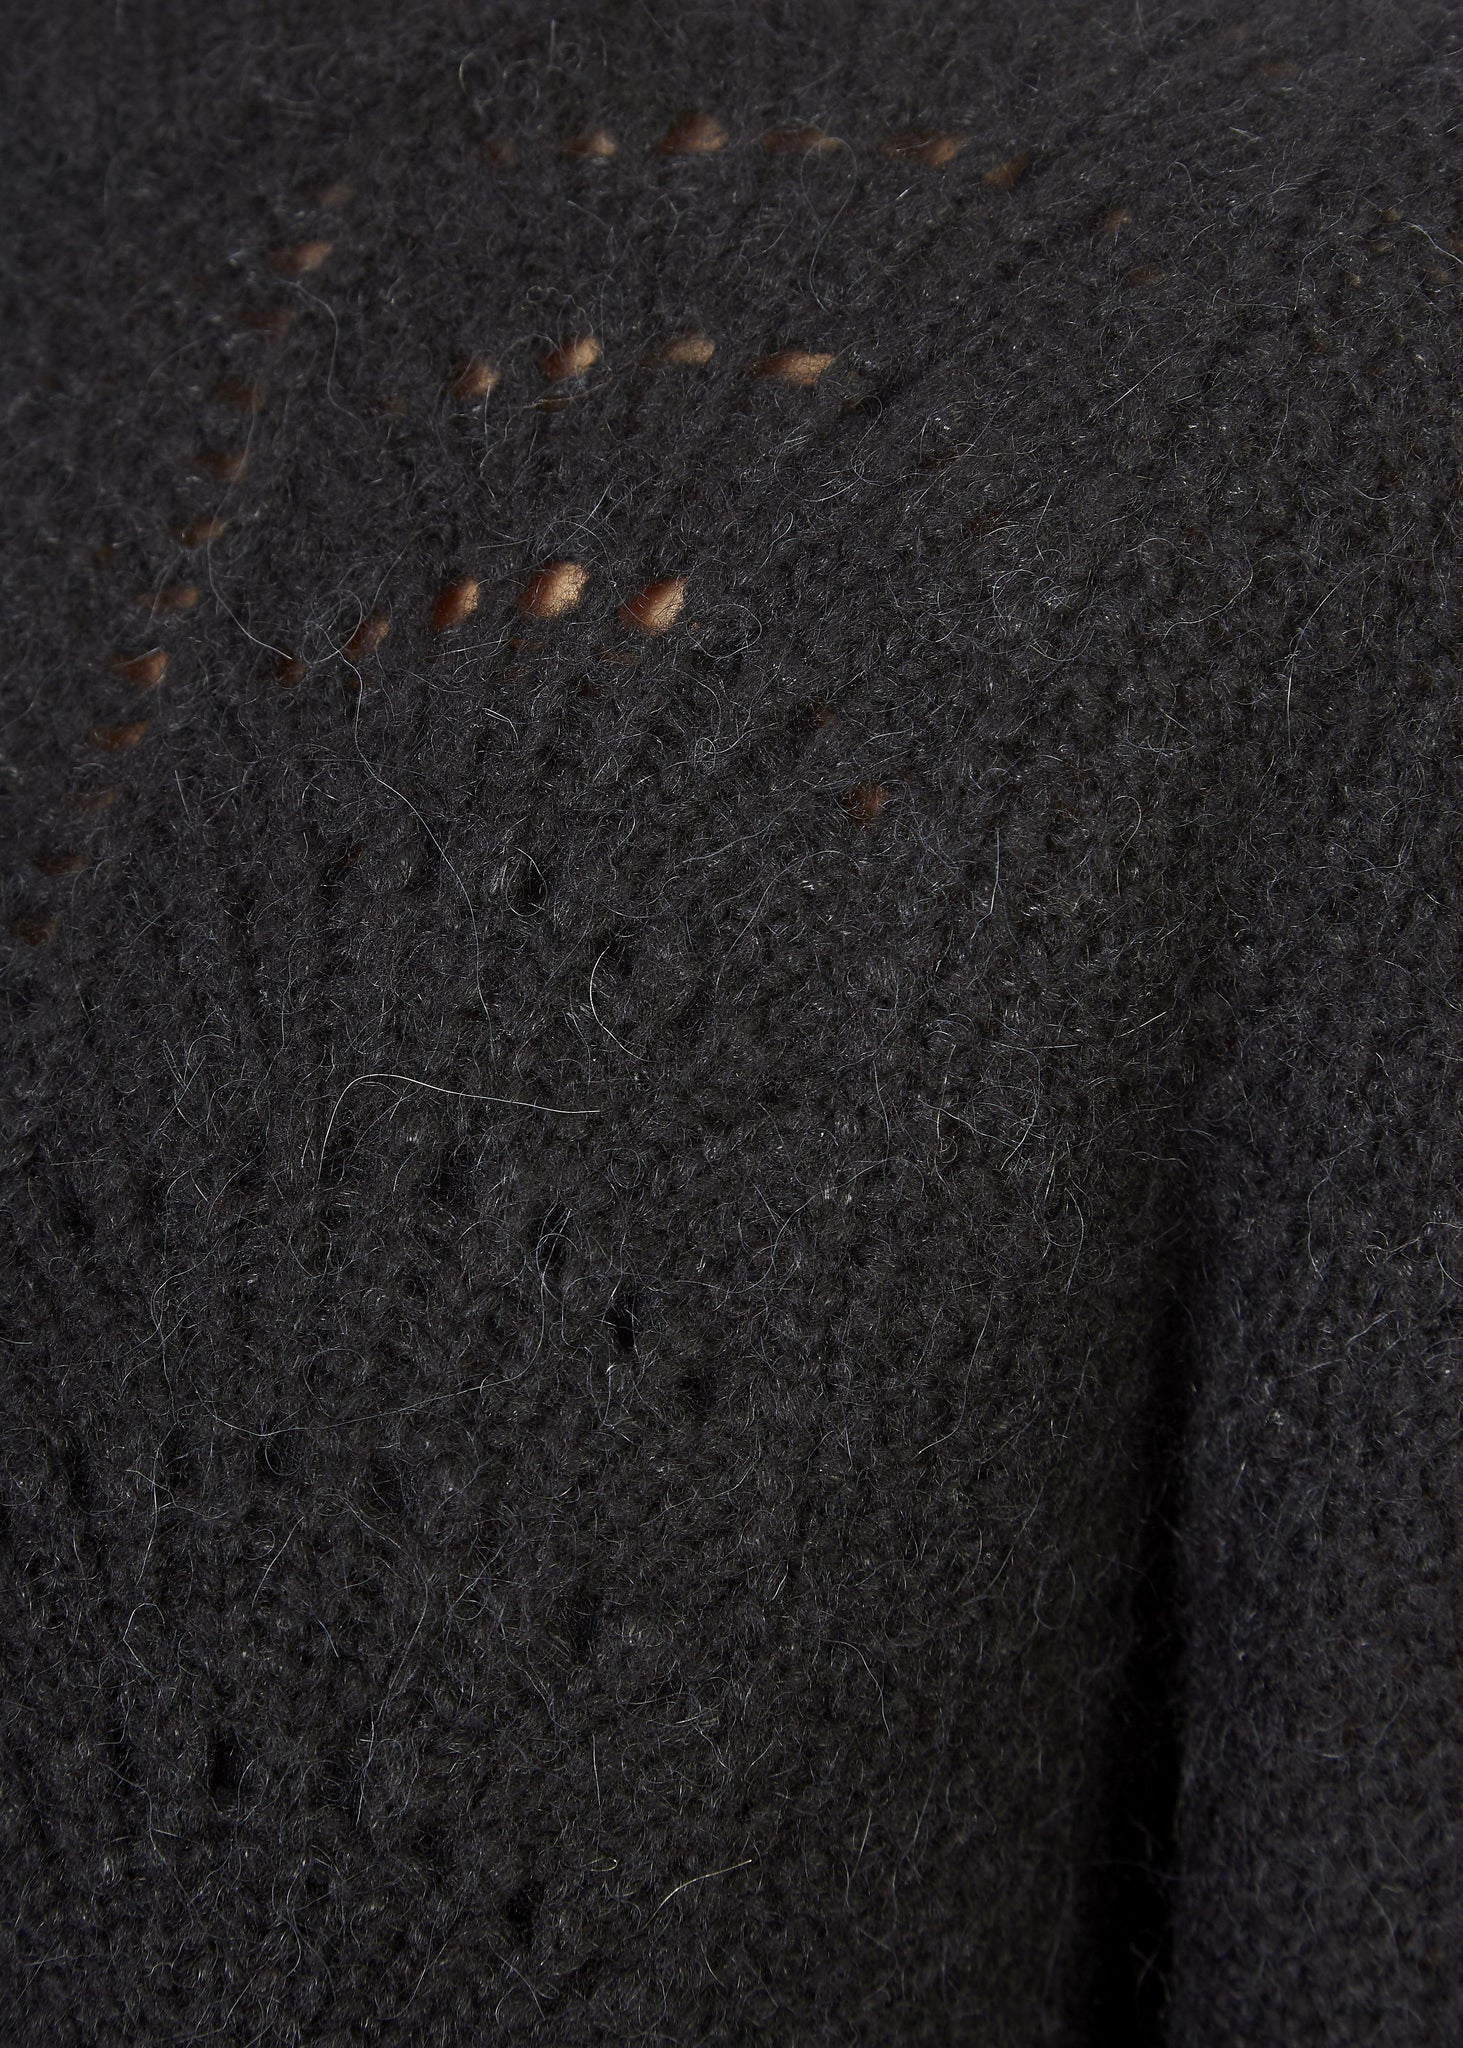 'Mara' Knitted Black Jumper - Jessimara